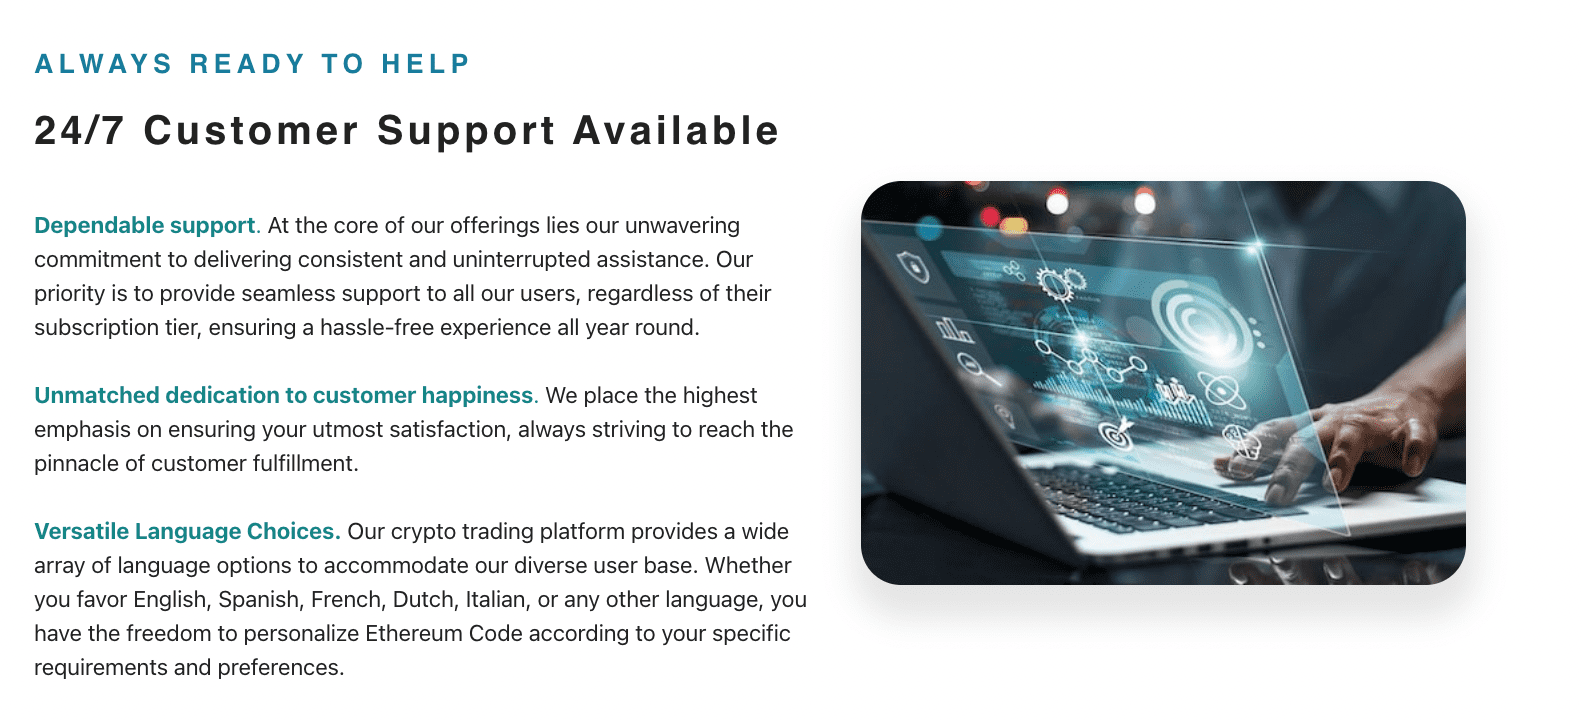 Soporte Trade 1.3 Cipro (model i3)